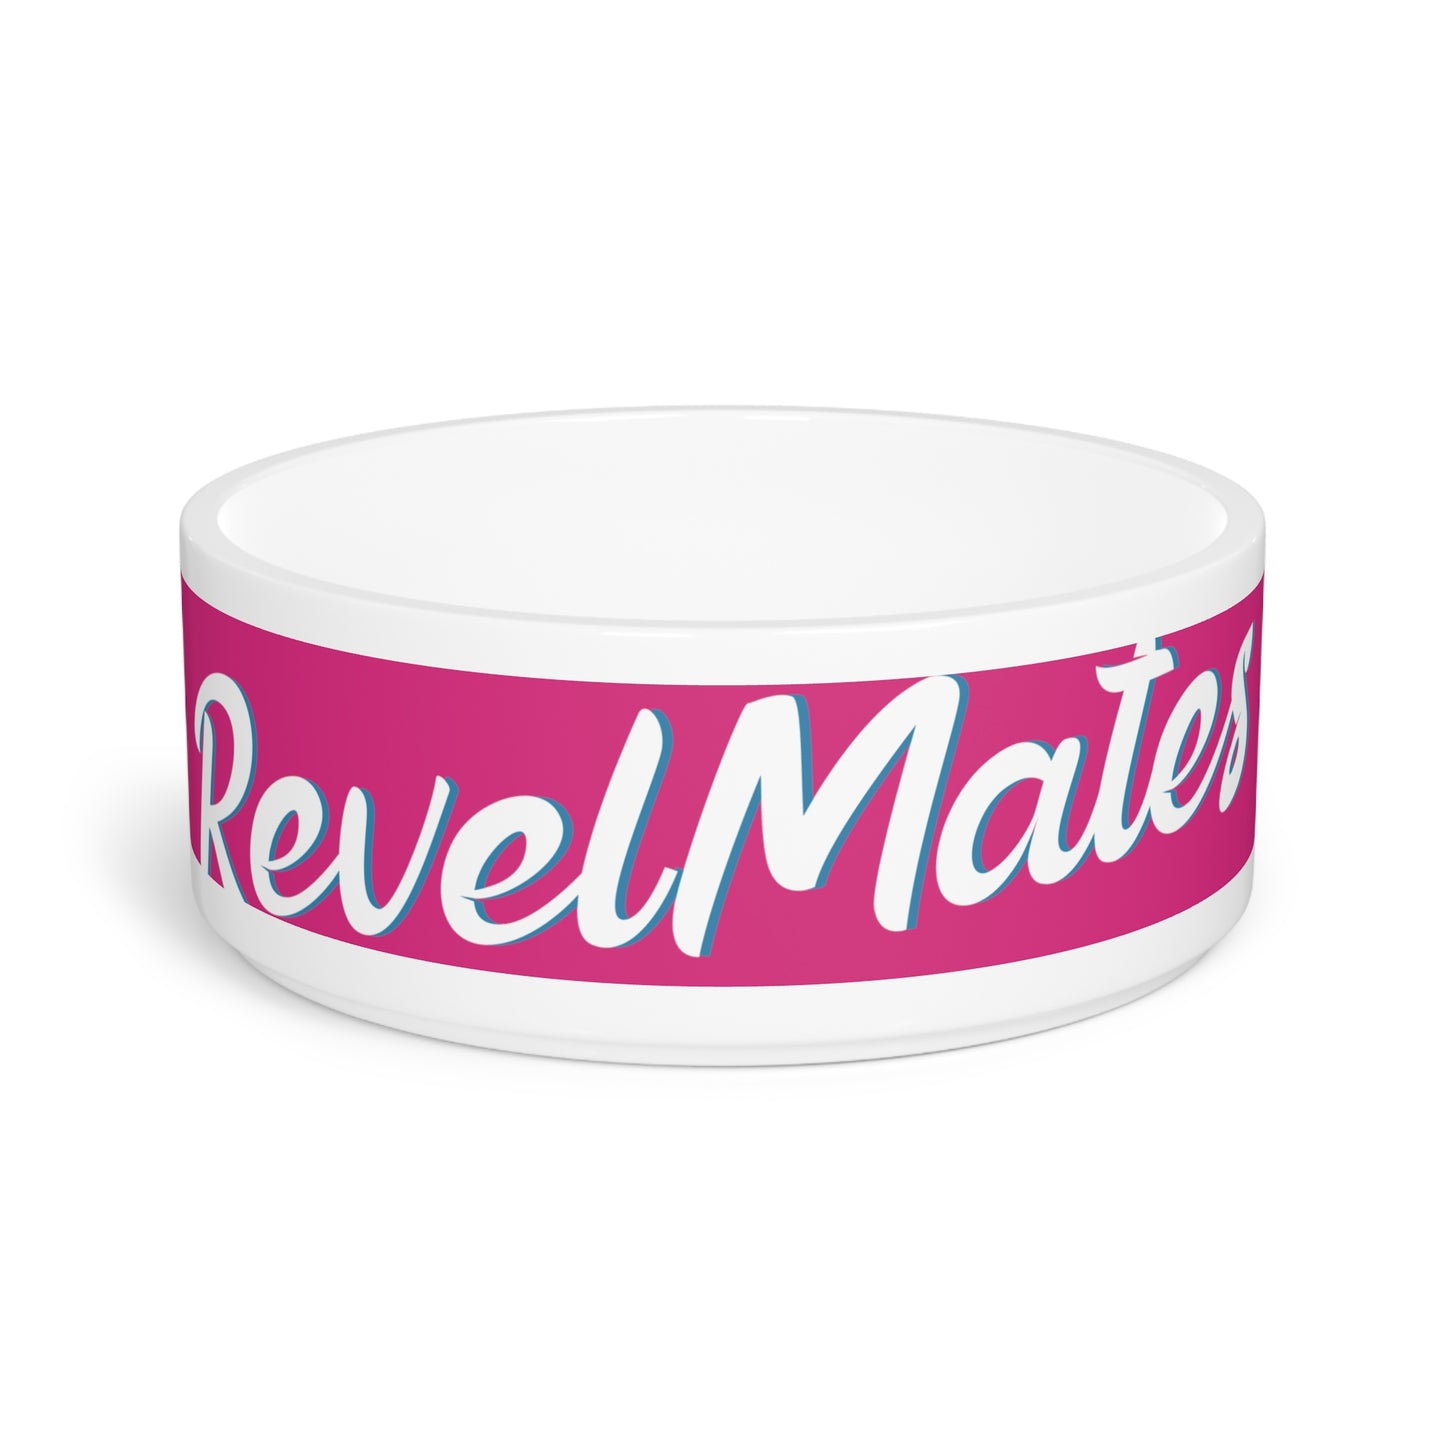 Pet Bowl 16oz (473ml) | Fuchsia & White RevelMates Design